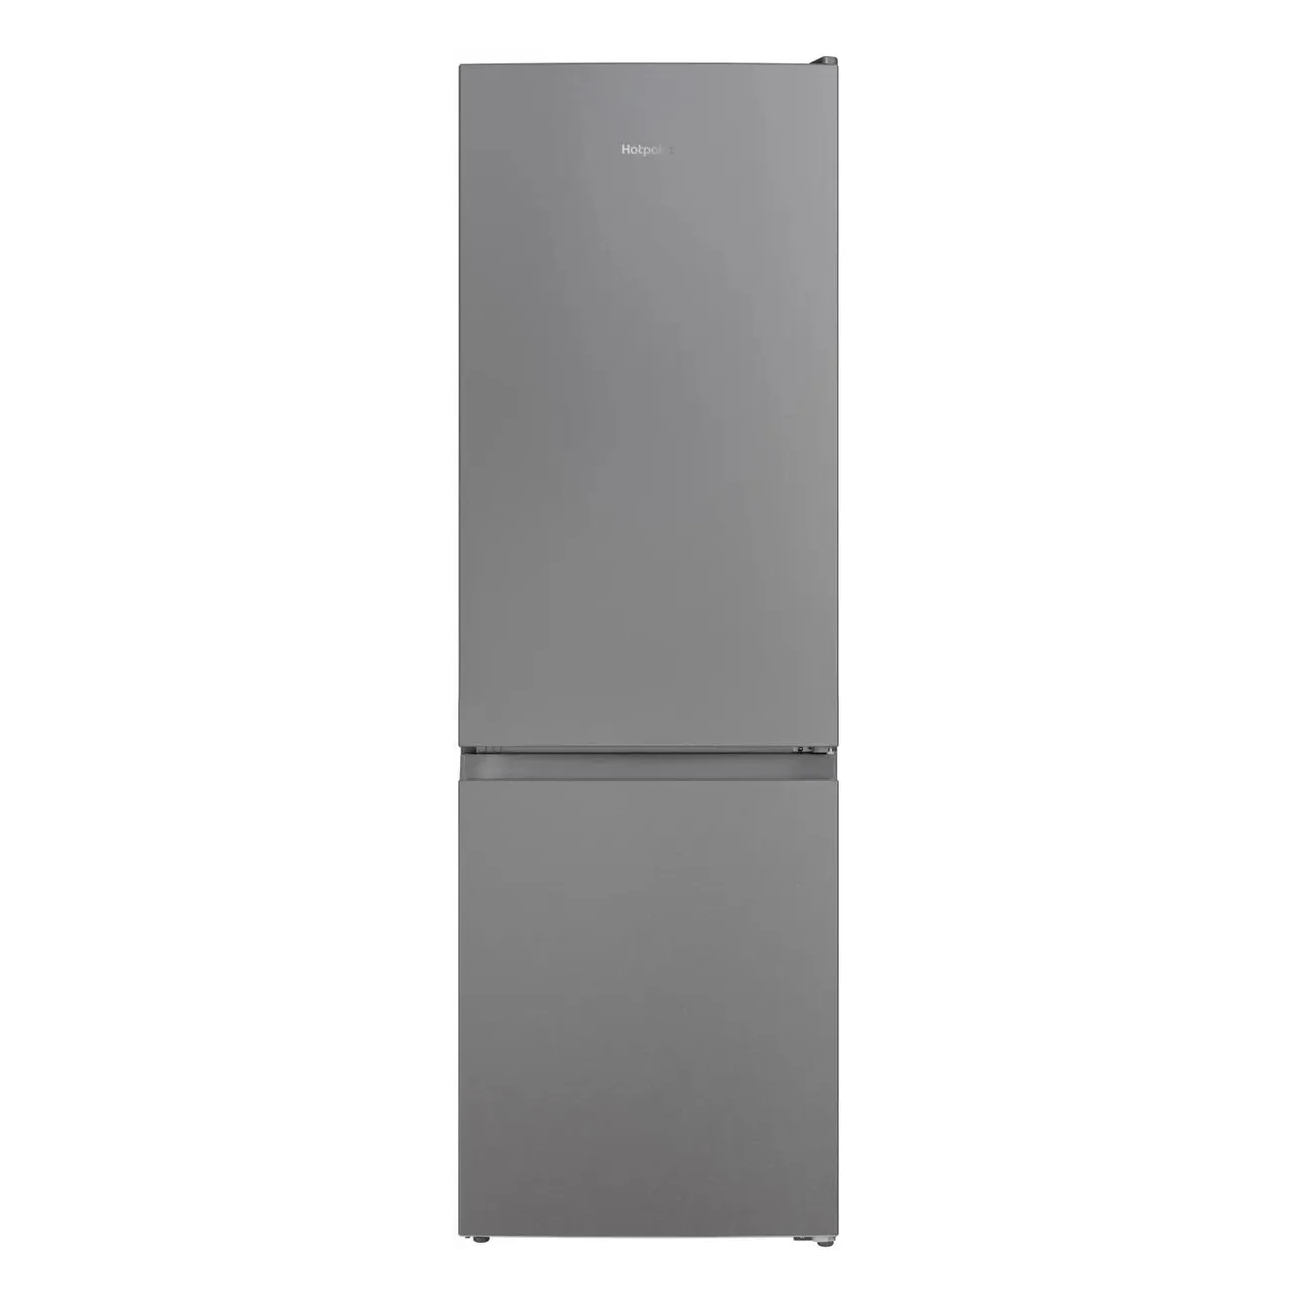 Холодильник HotPoint HT 4180 S серебристый двухкамерный холодильник hotpoint ht 4180 m мраморный